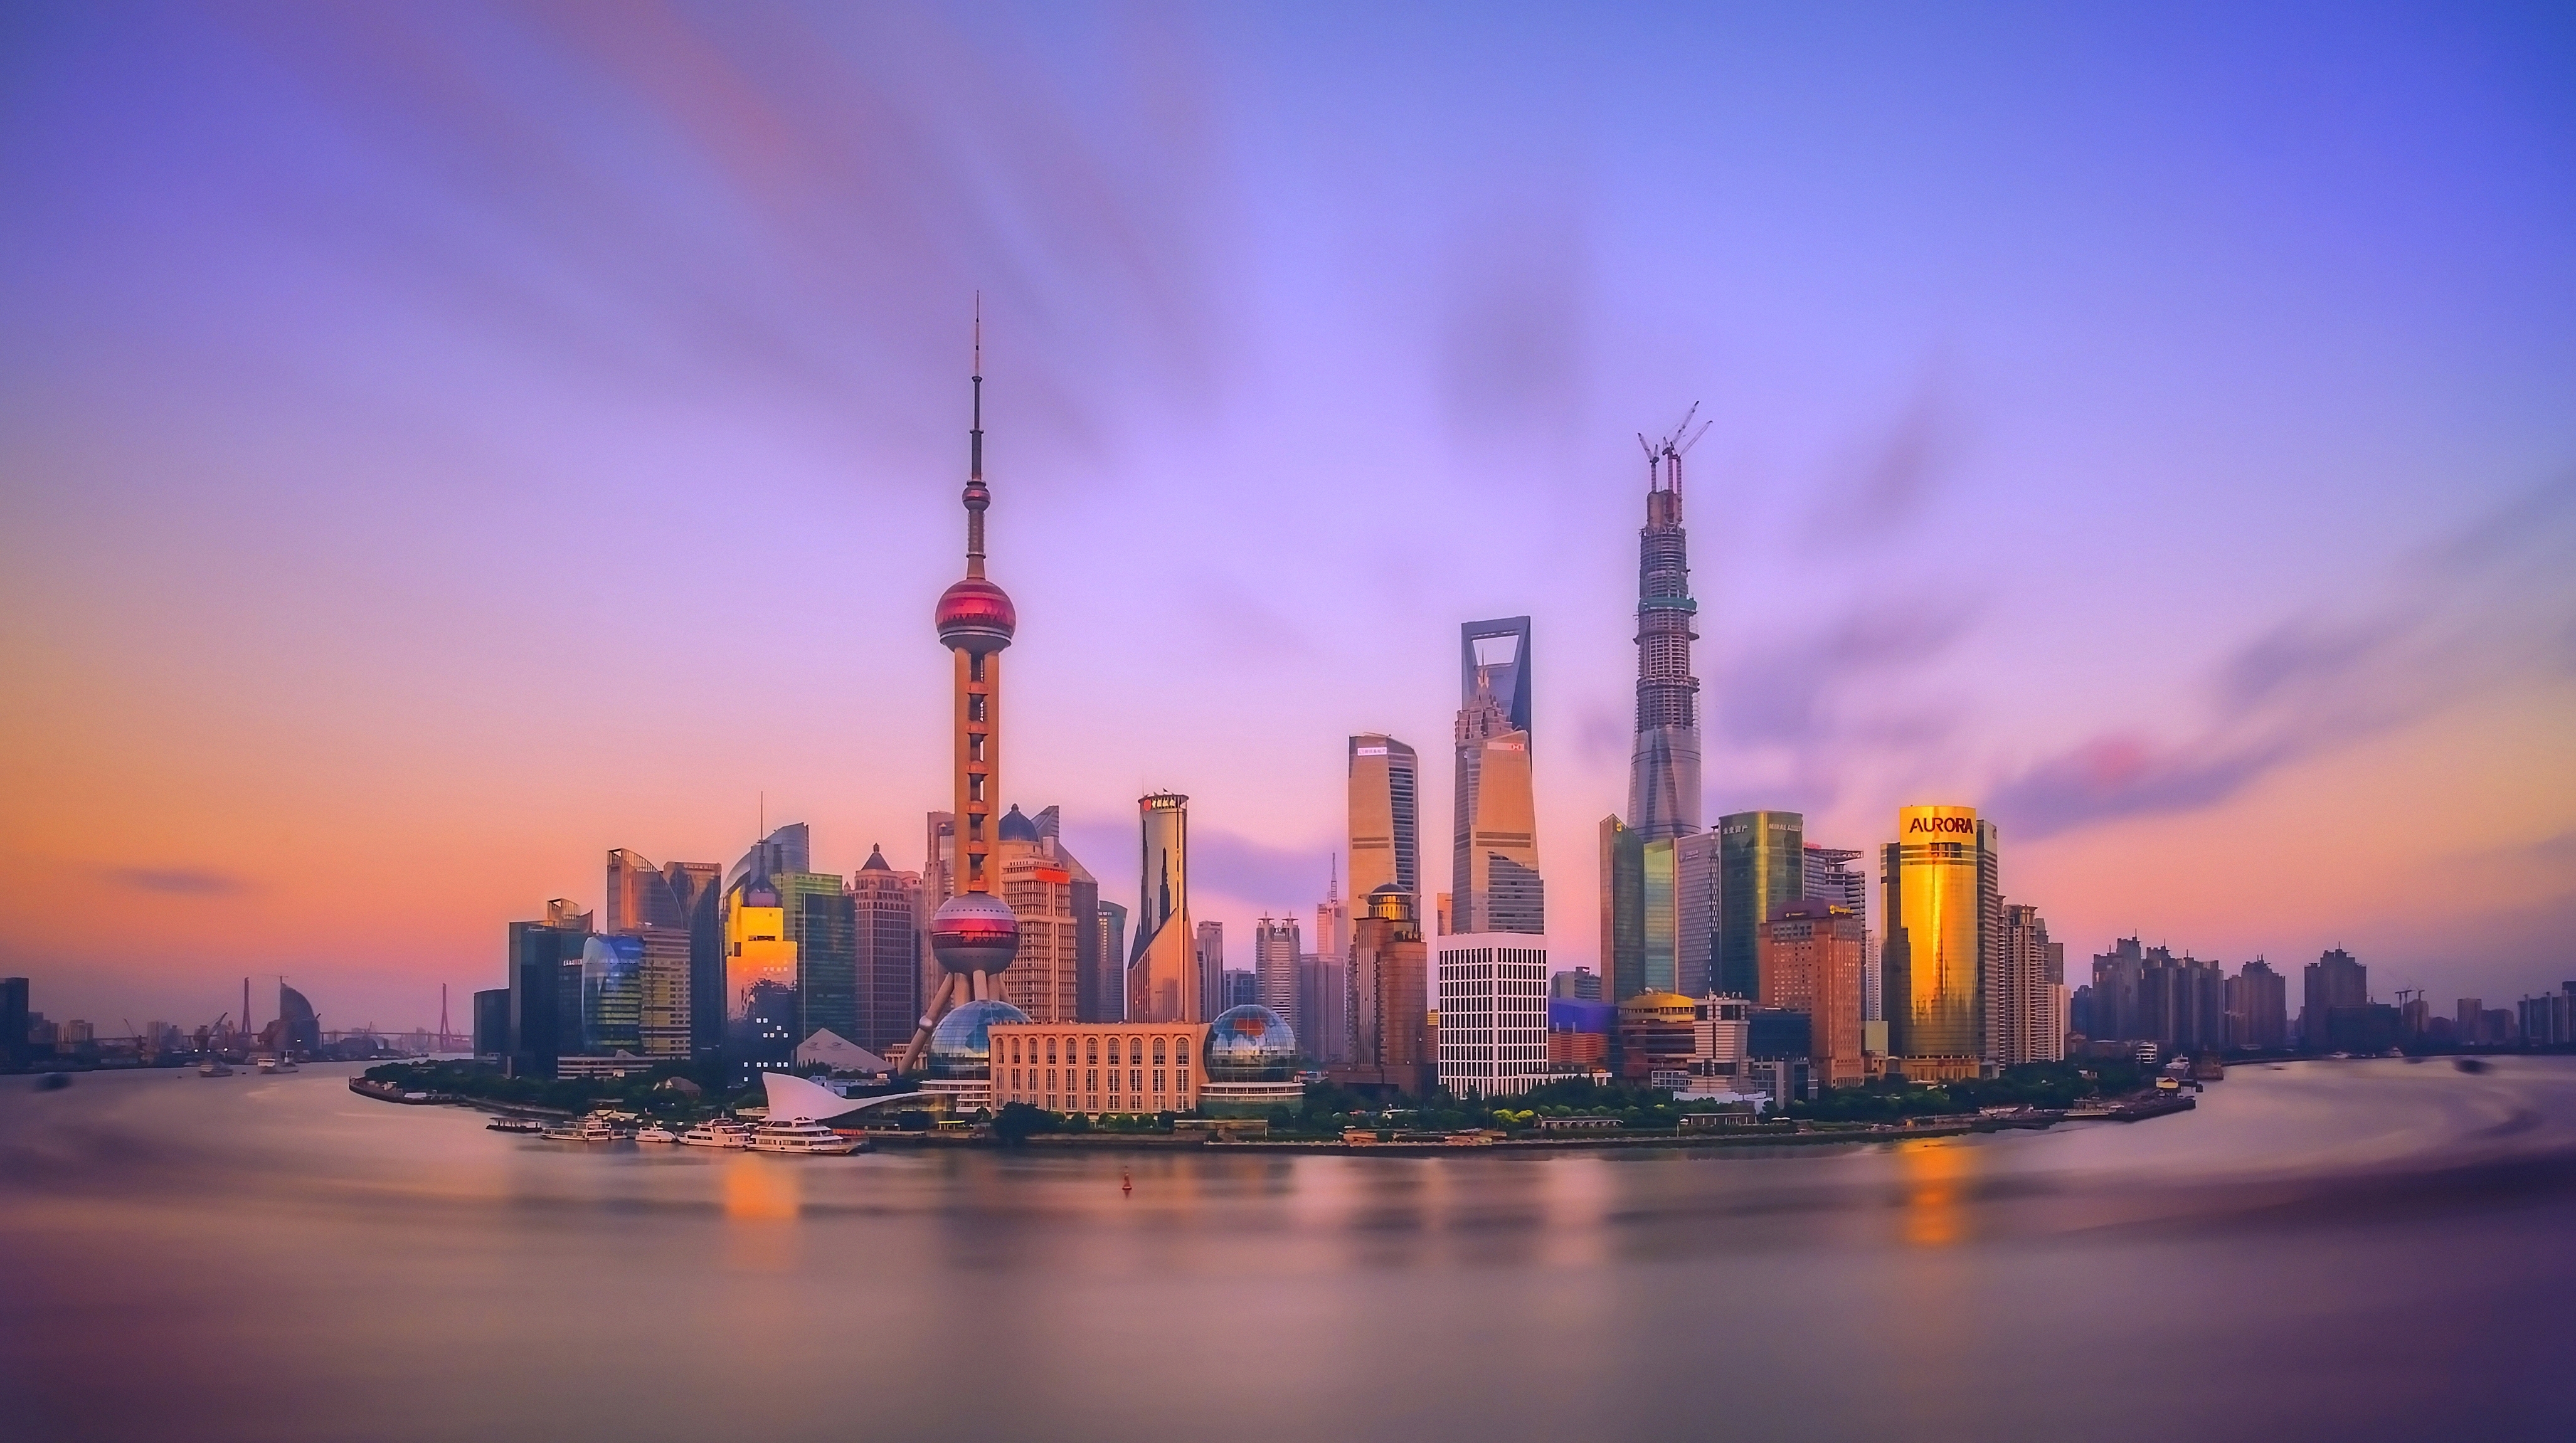 Shanghai Skyline 4k Ultra HD Wallpaper Background Image